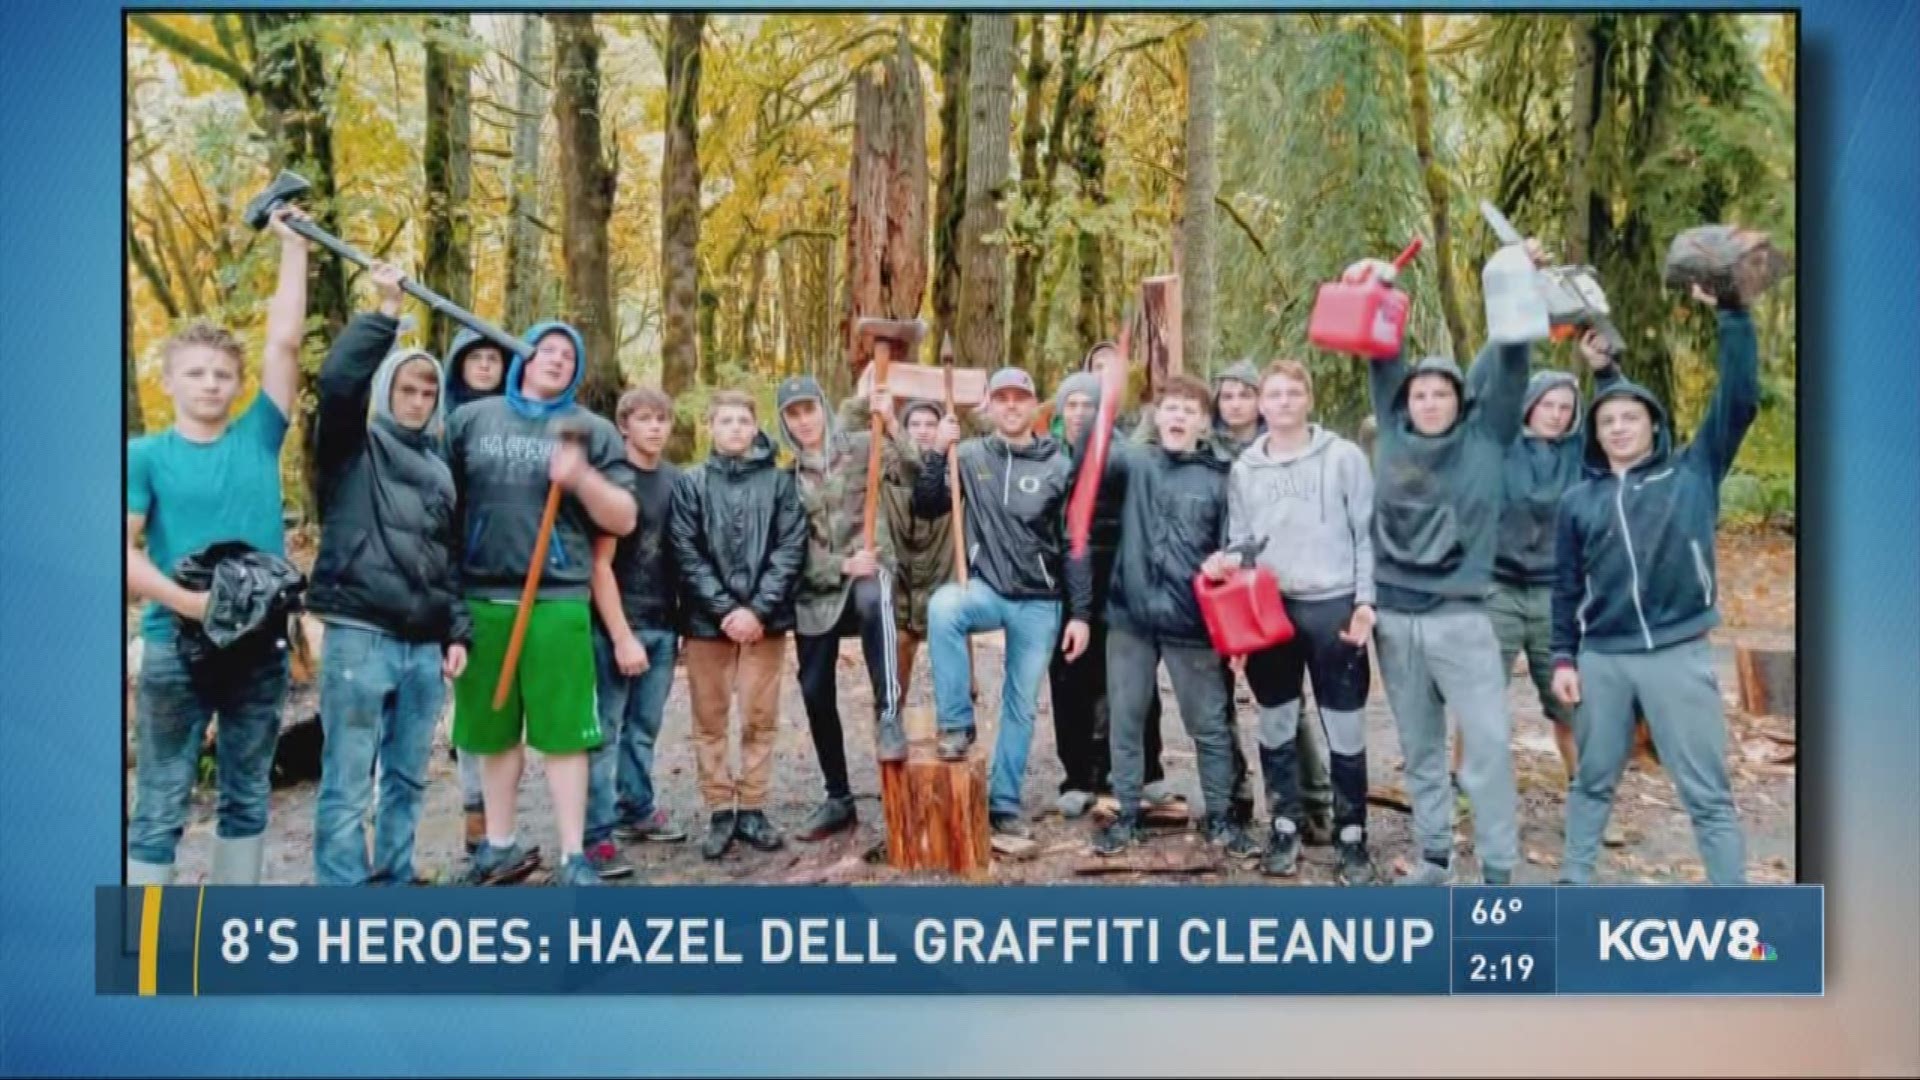 8's Heroes: Hazel Dell graffiti cleanup